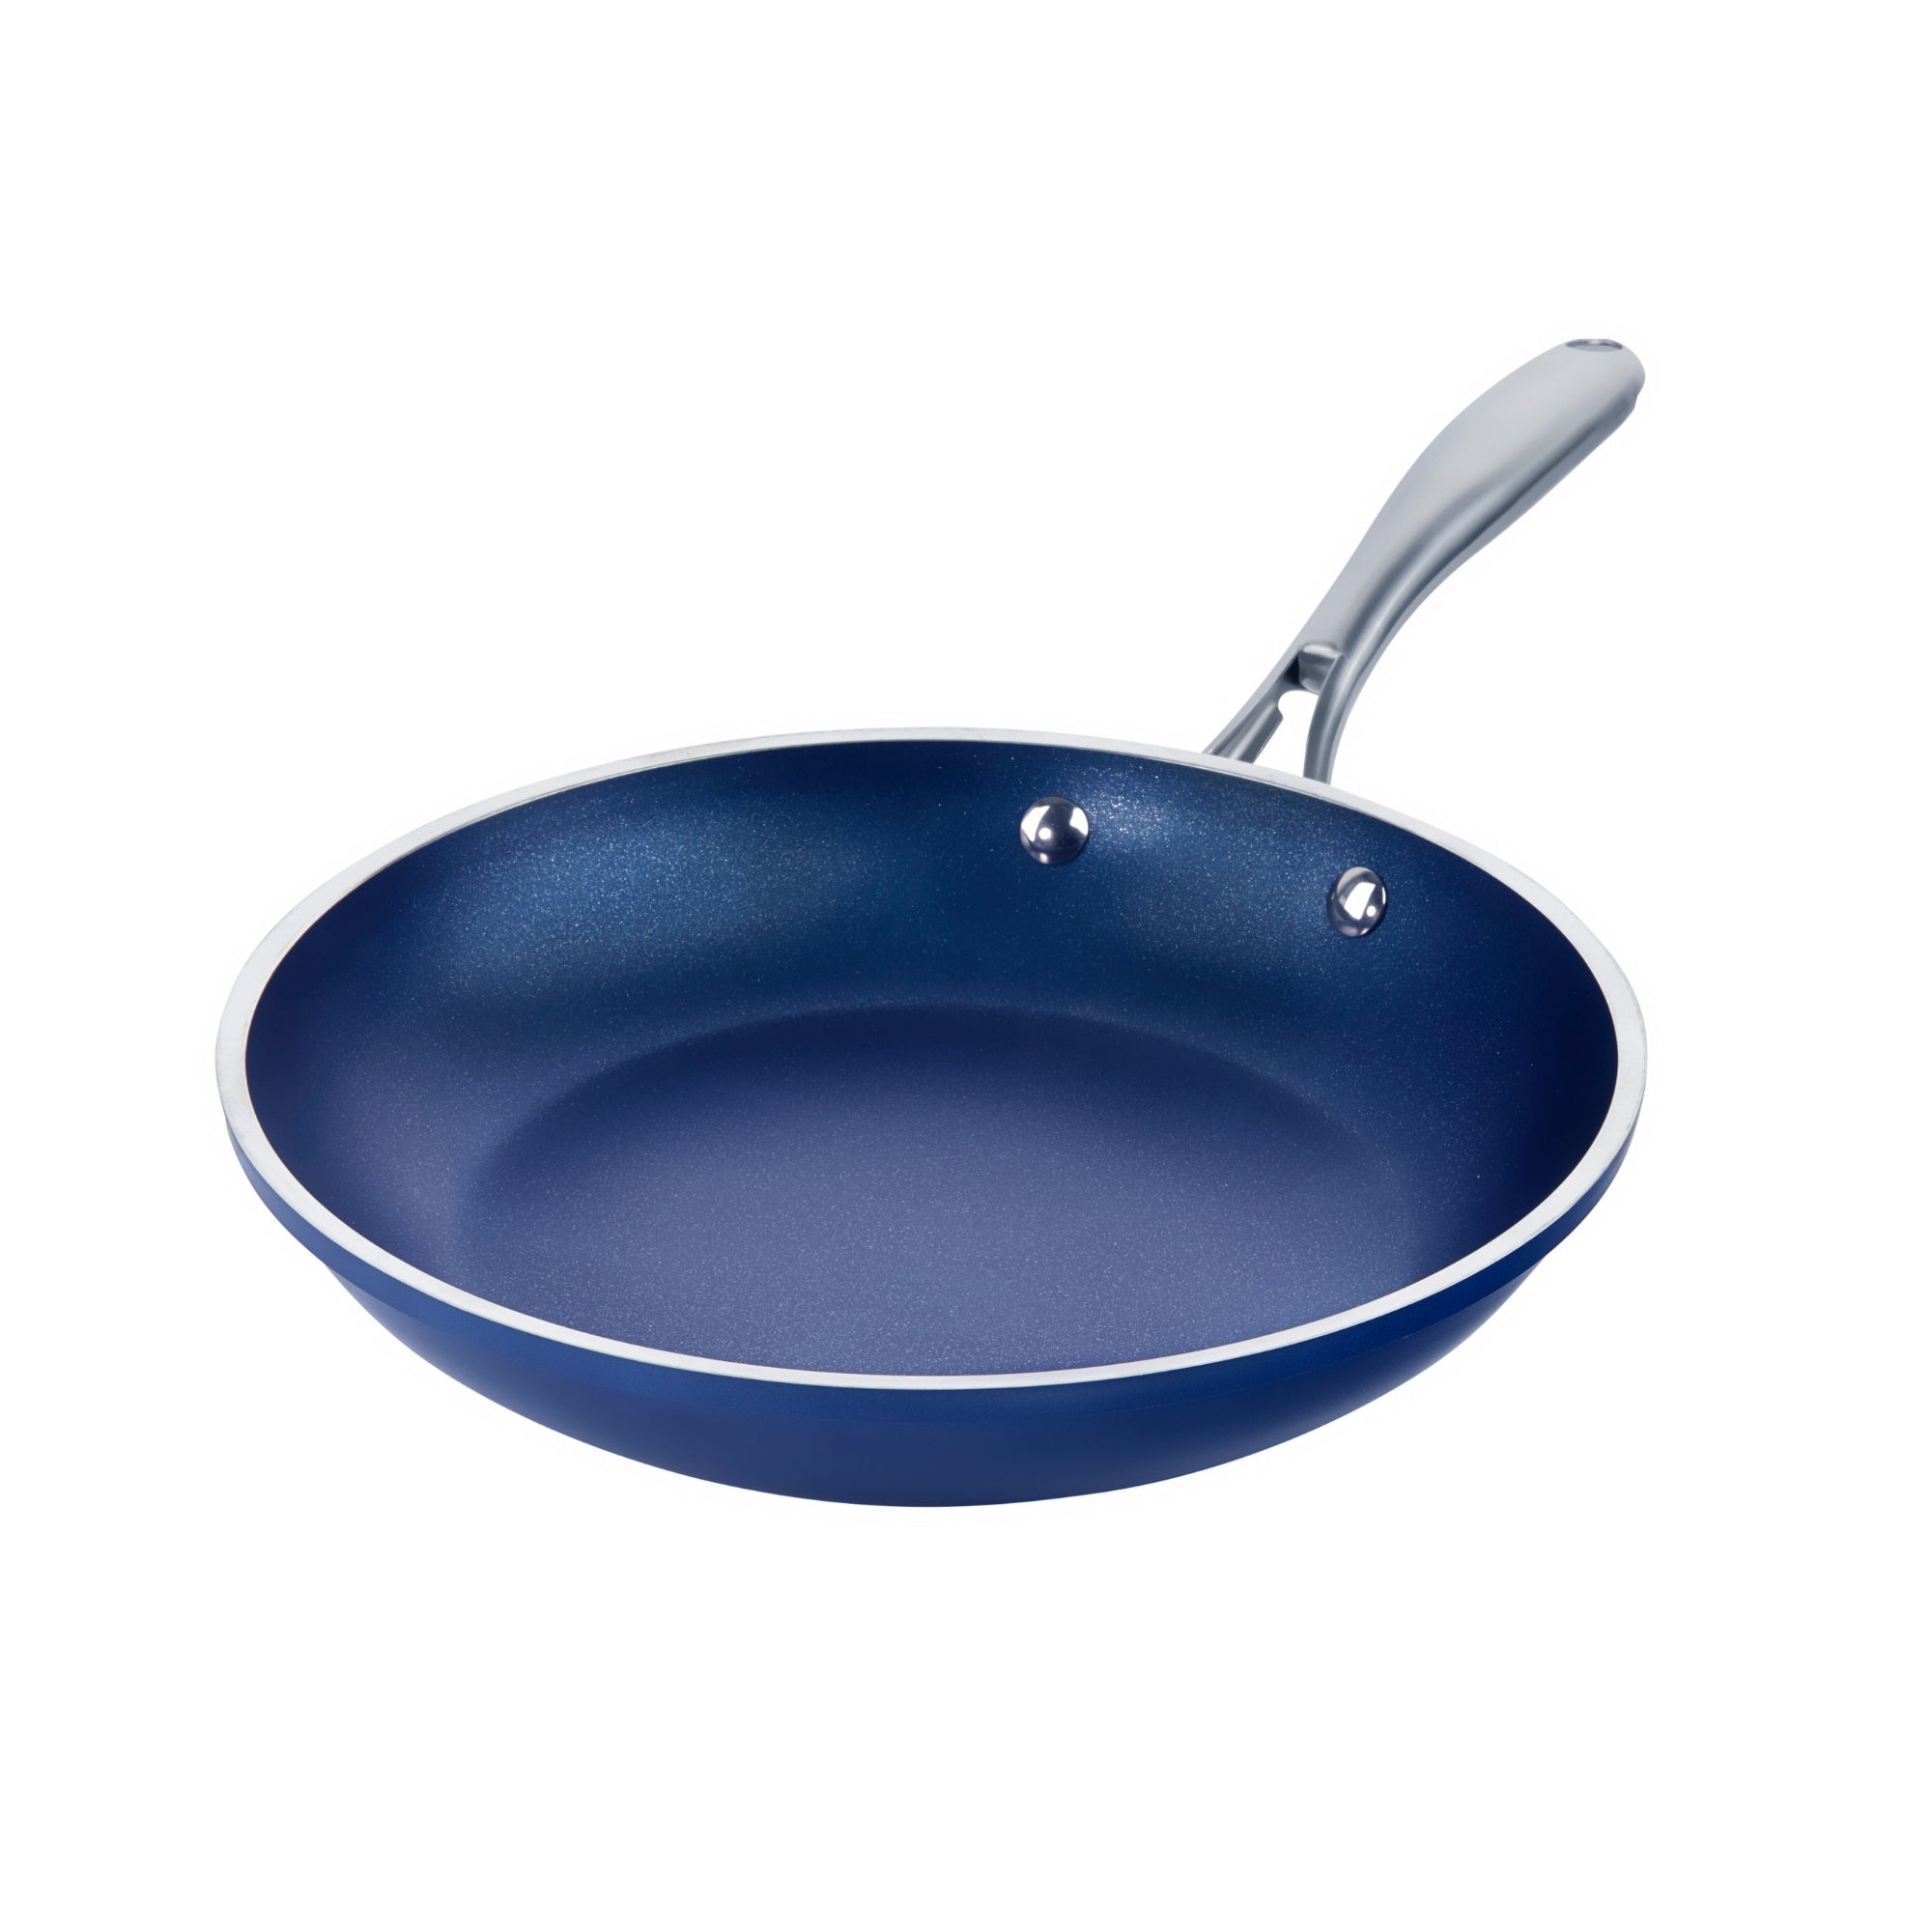 Granitestone Blue 14 inch Fry Pan